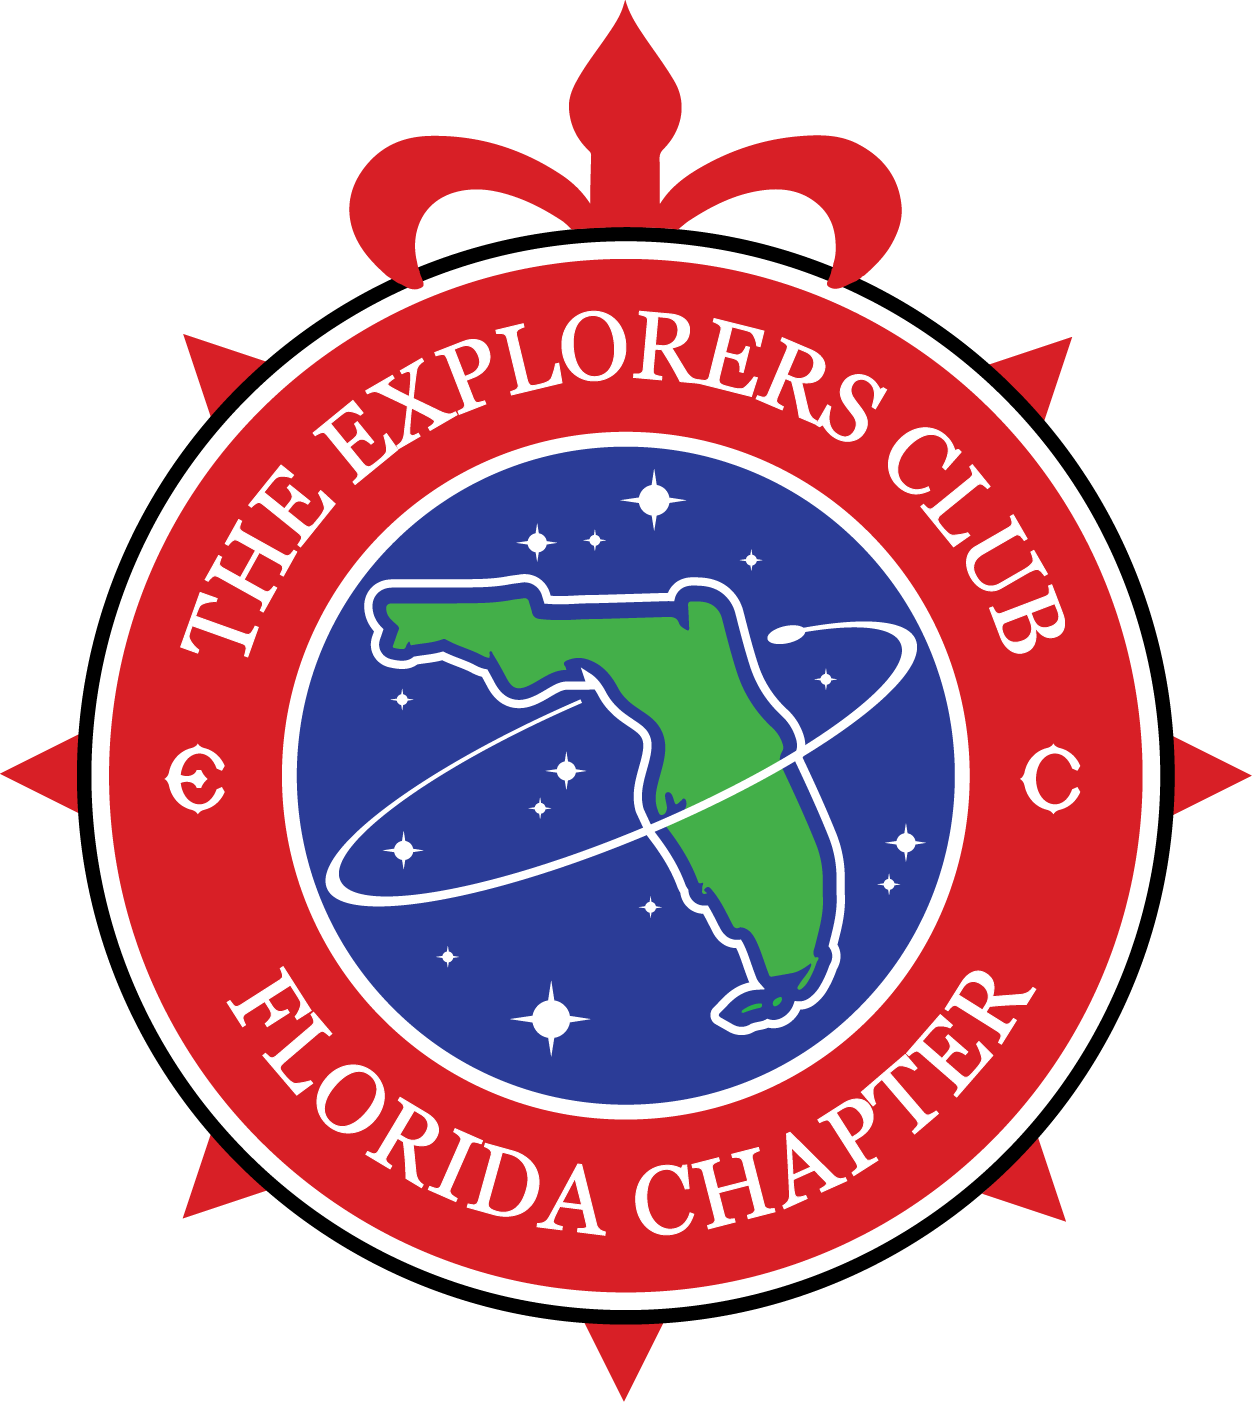 The Explorers Club badge